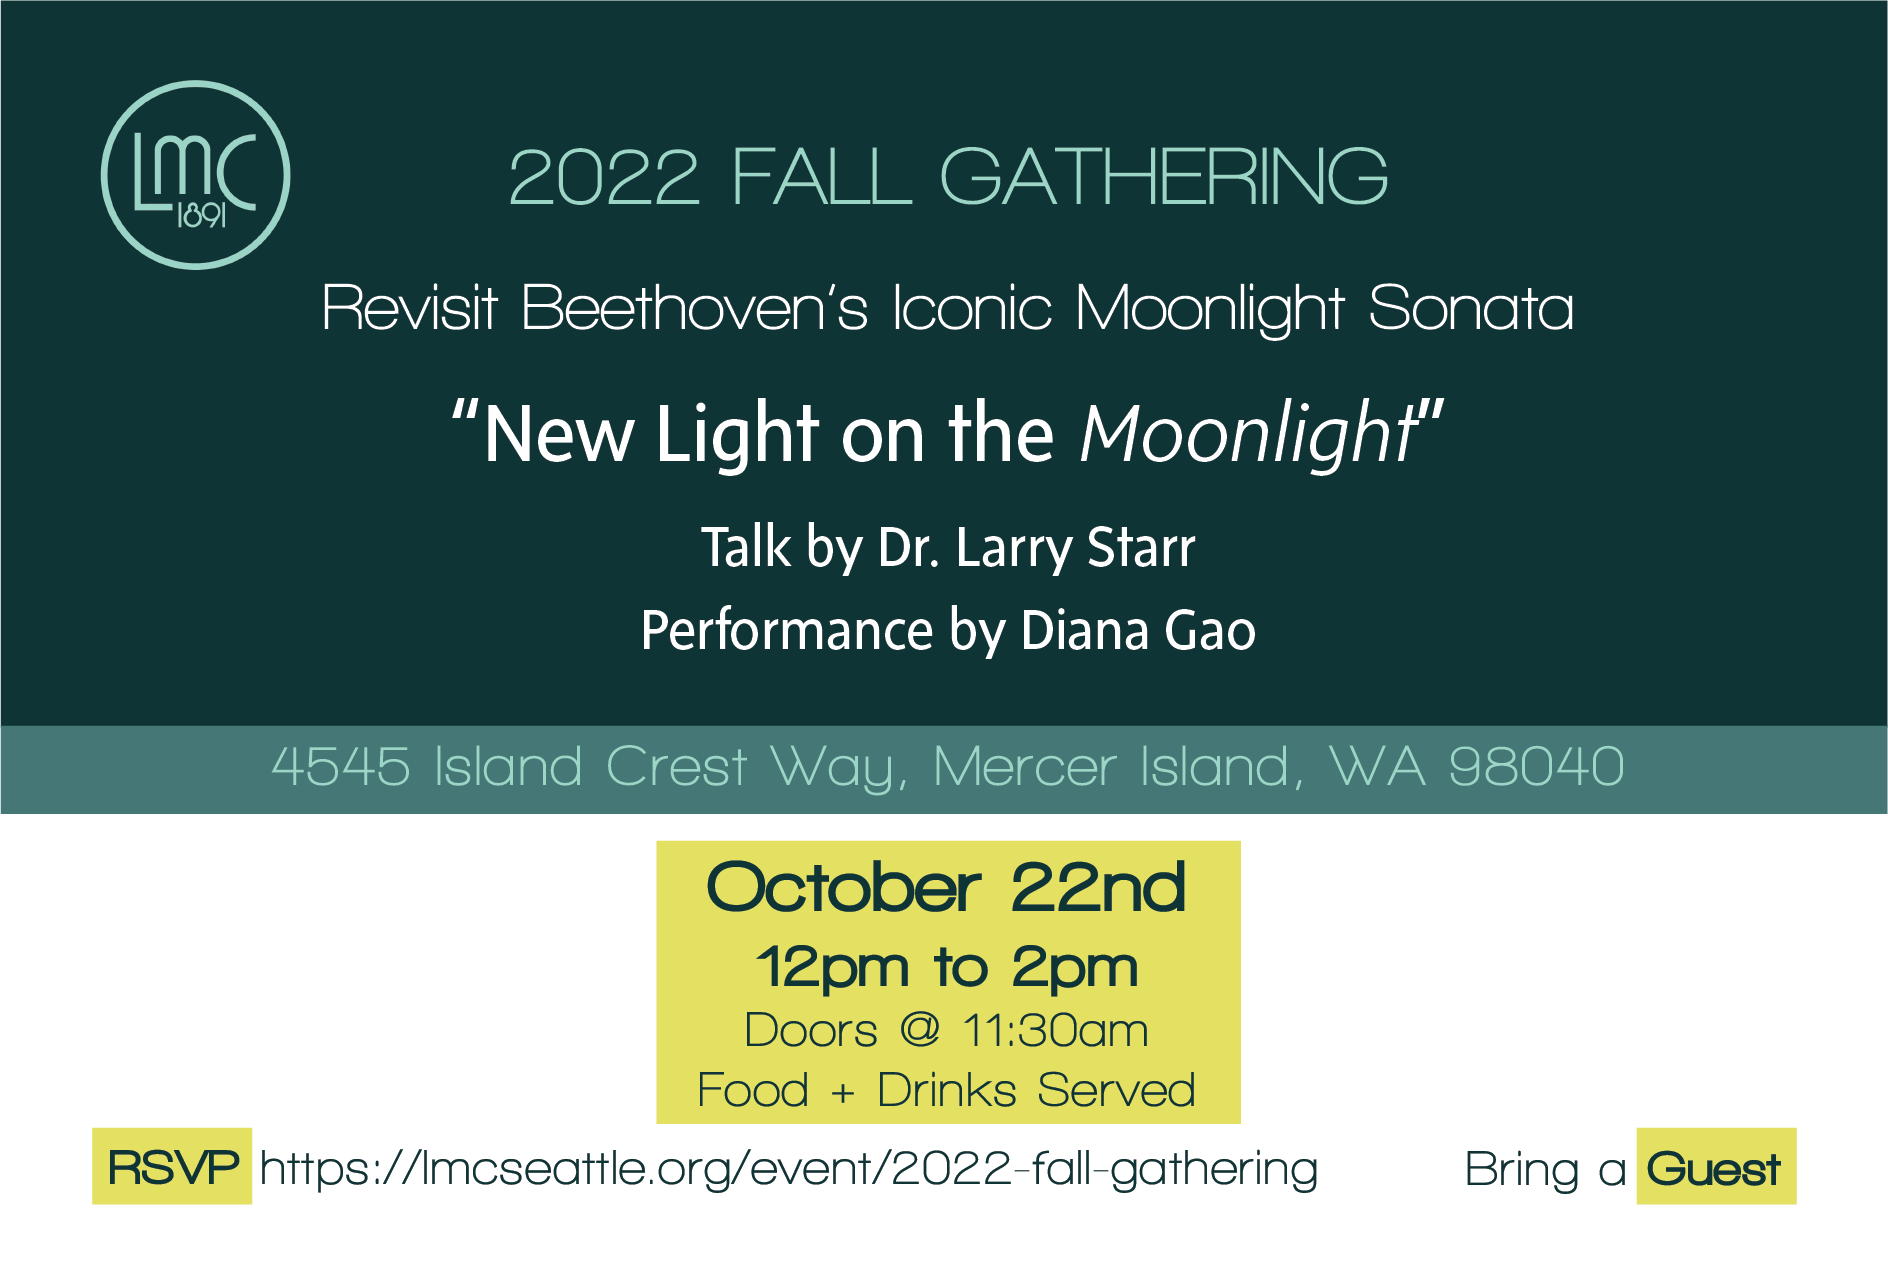 2022 Fall Gathering Invite